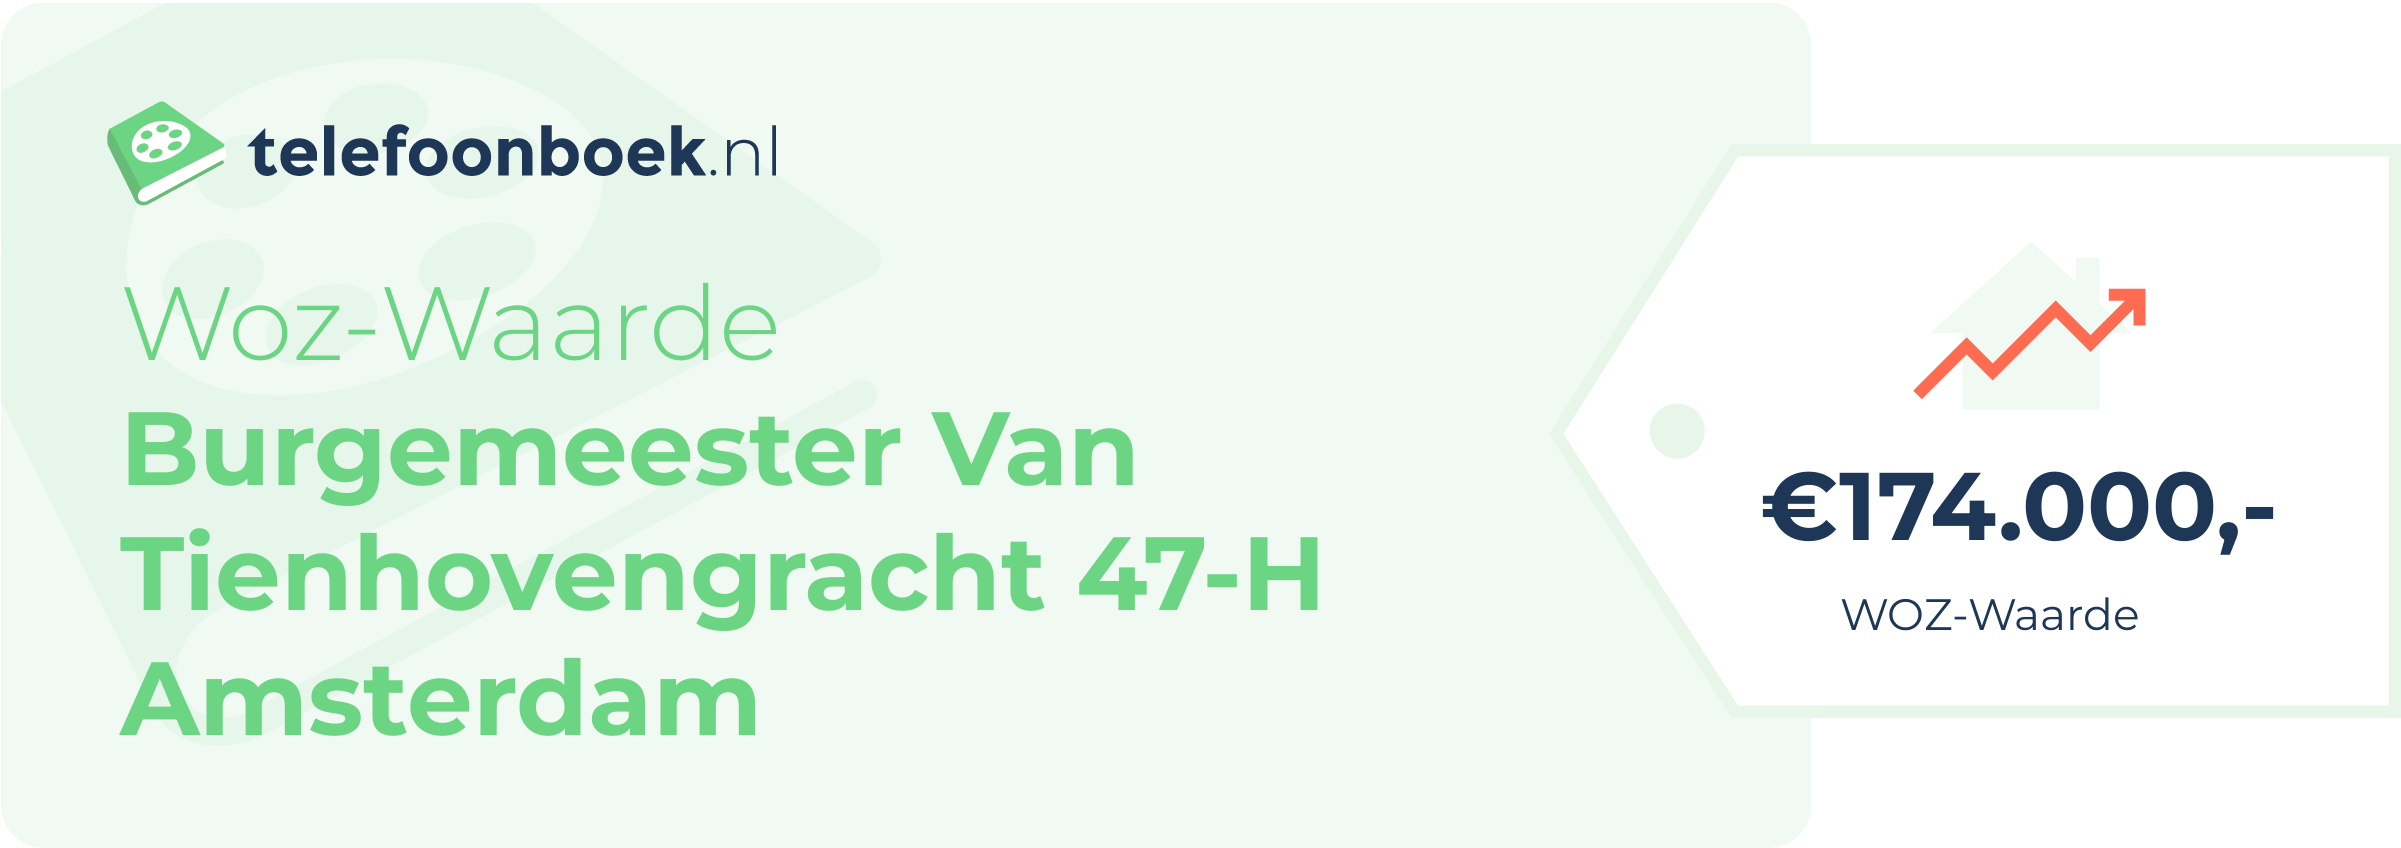 WOZ-waarde Burgemeester Van Tienhovengracht 47-H Amsterdam